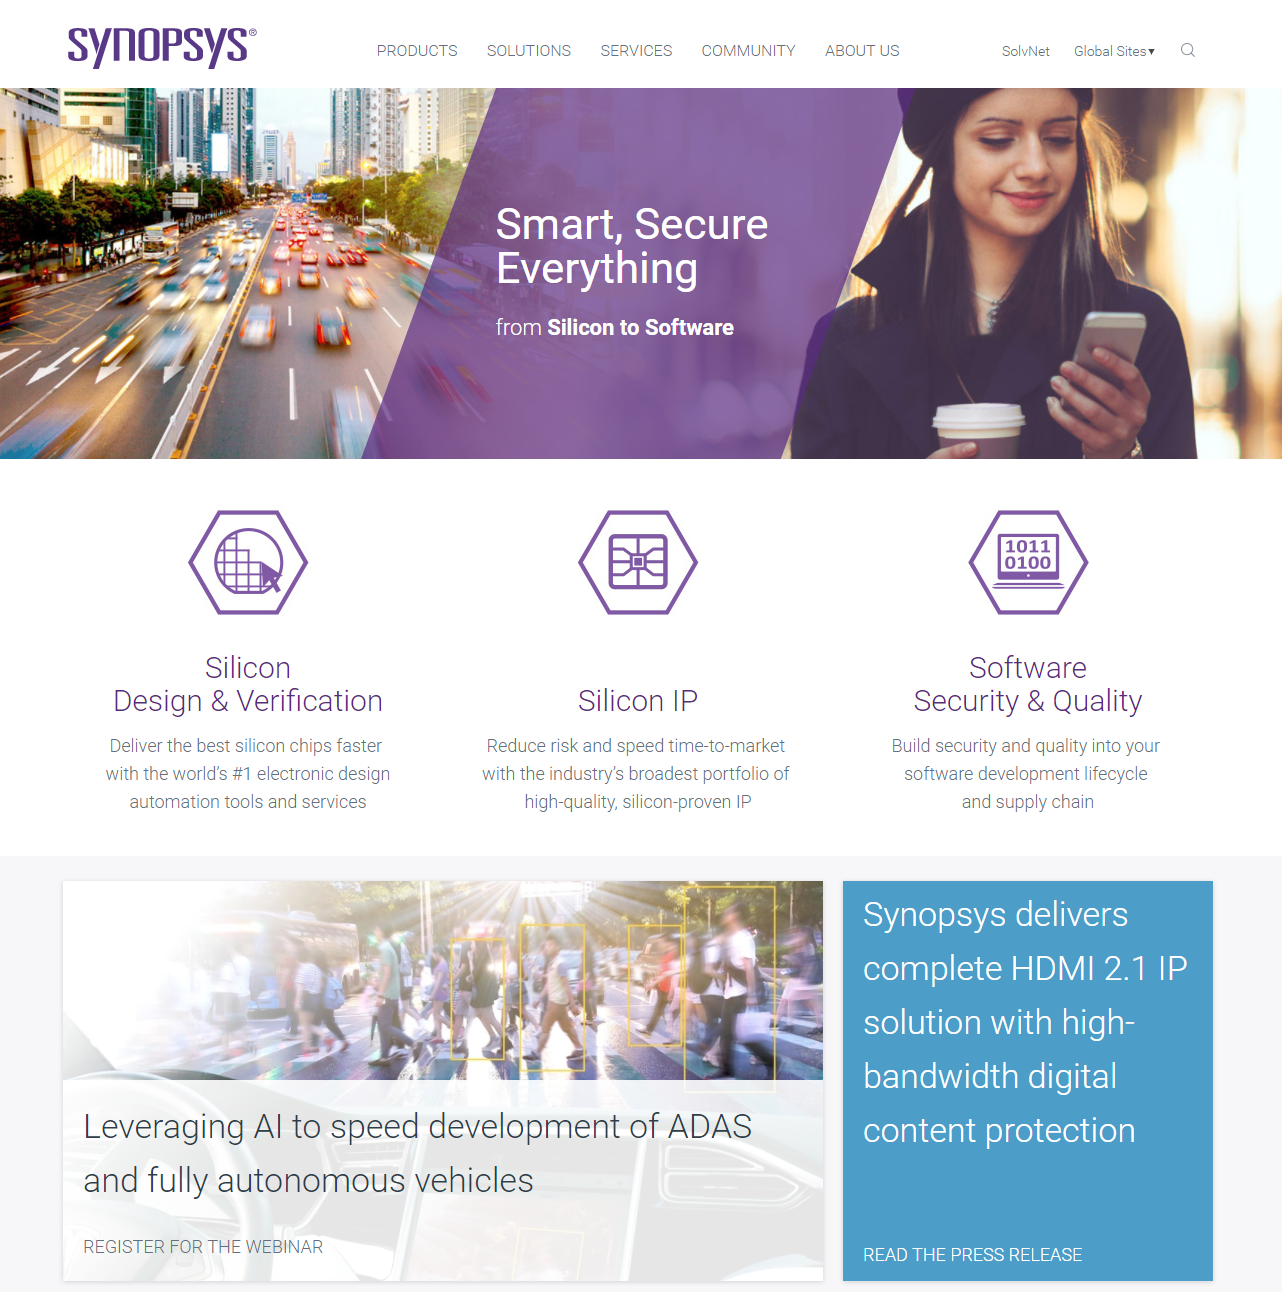 image of Synopsys Digital Marketing Team Wins 2017 Best Electronics Mobile Website Mobile WebAward for Synopsys.com